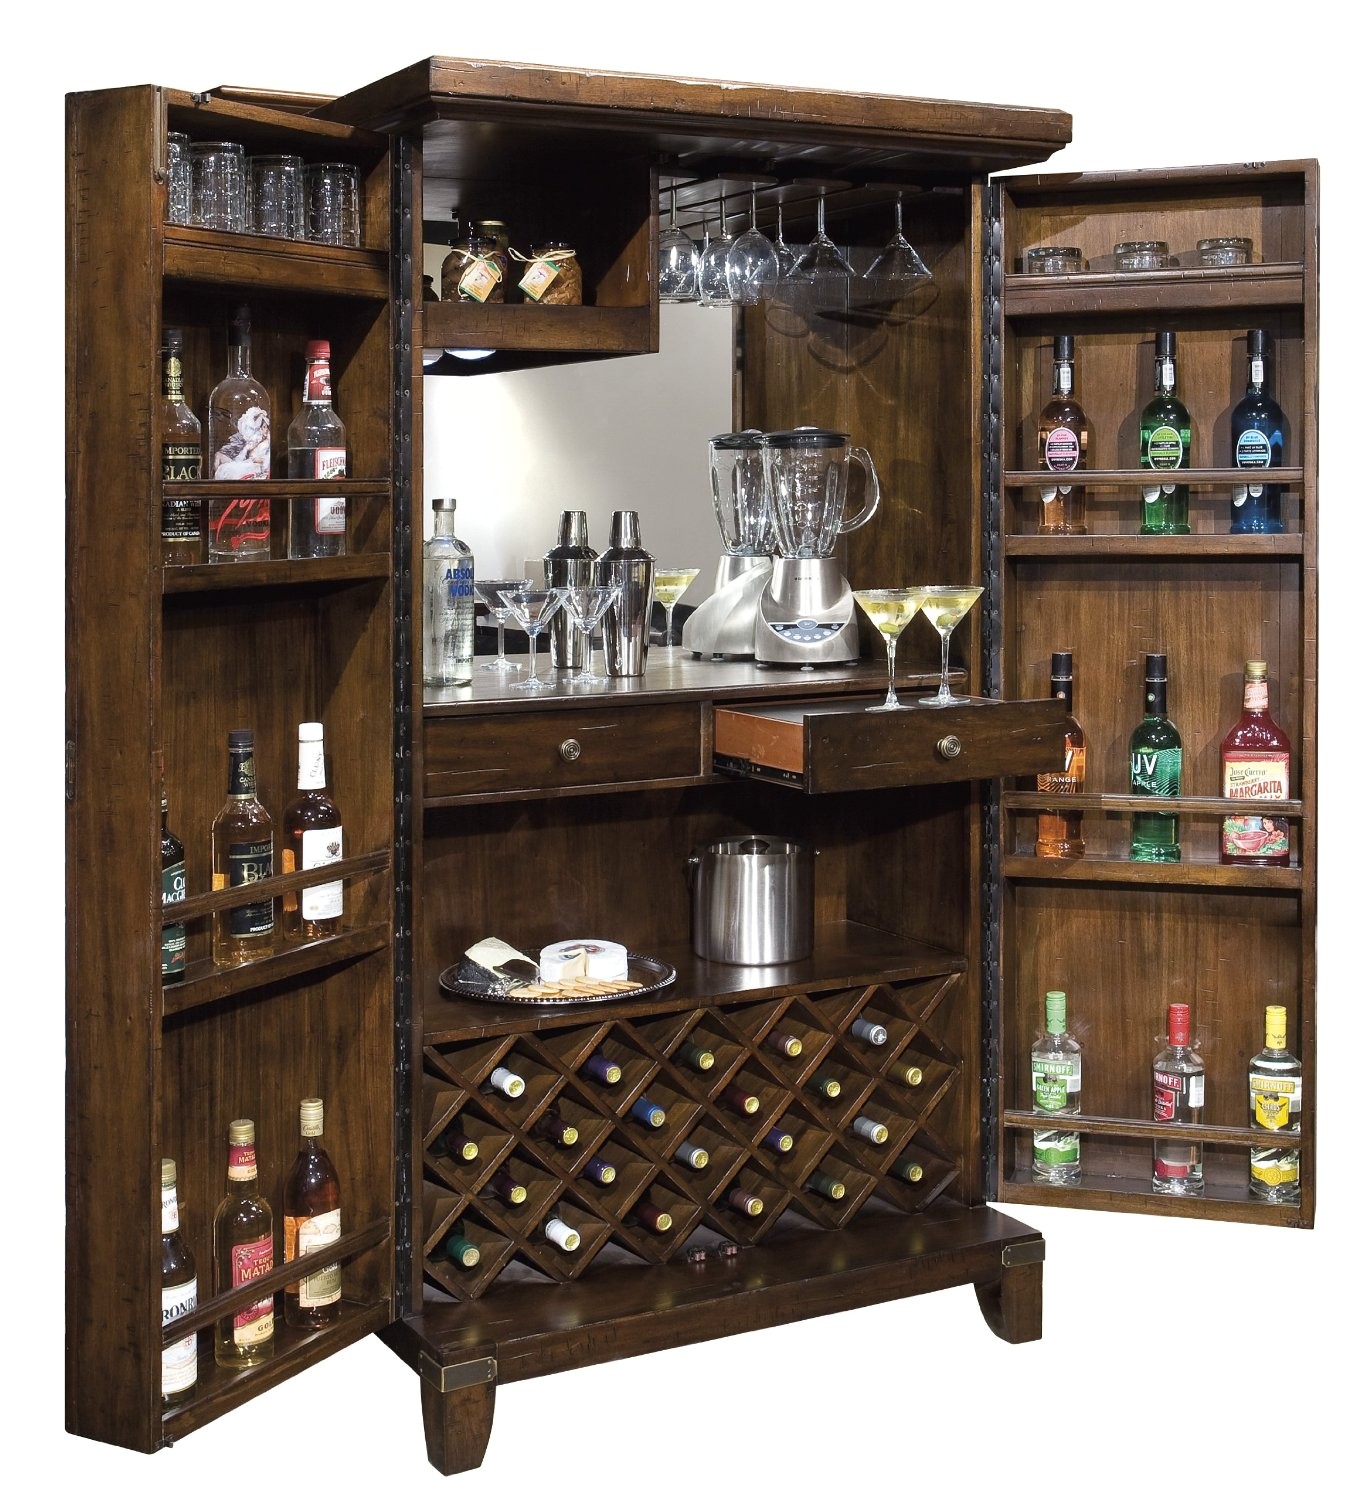 standing wine and liquor cabinet in dark wood